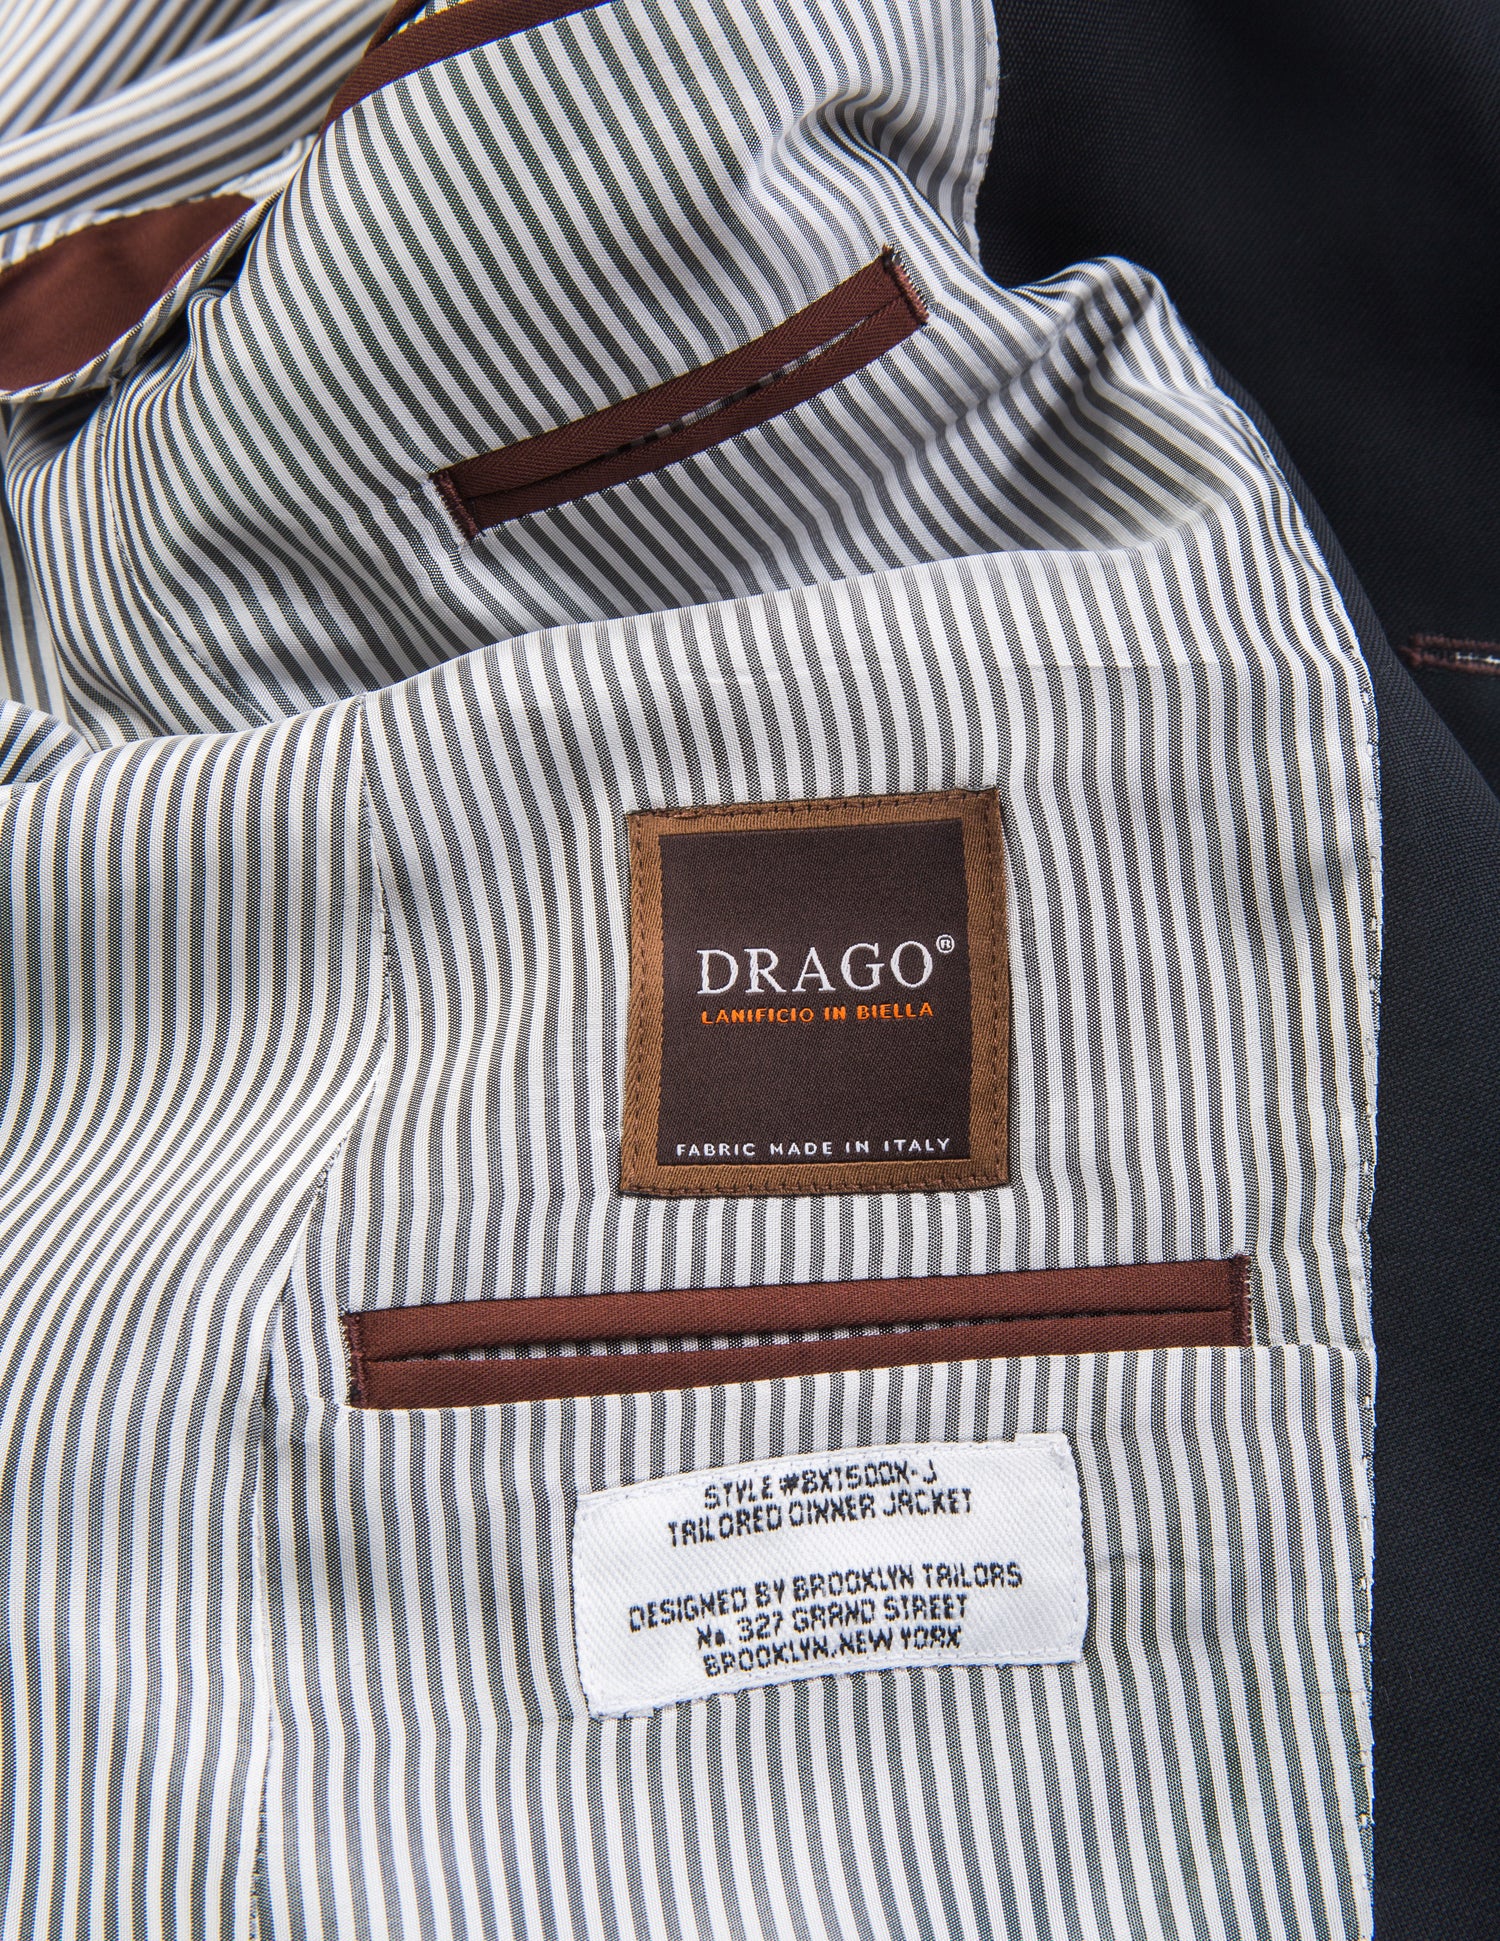 Detail shot of Brooklyn Tailors BKT50 Shawl Collar Dinner Jacket in Herringbone Wool/Cotton - Brick showing Drago label on the interior